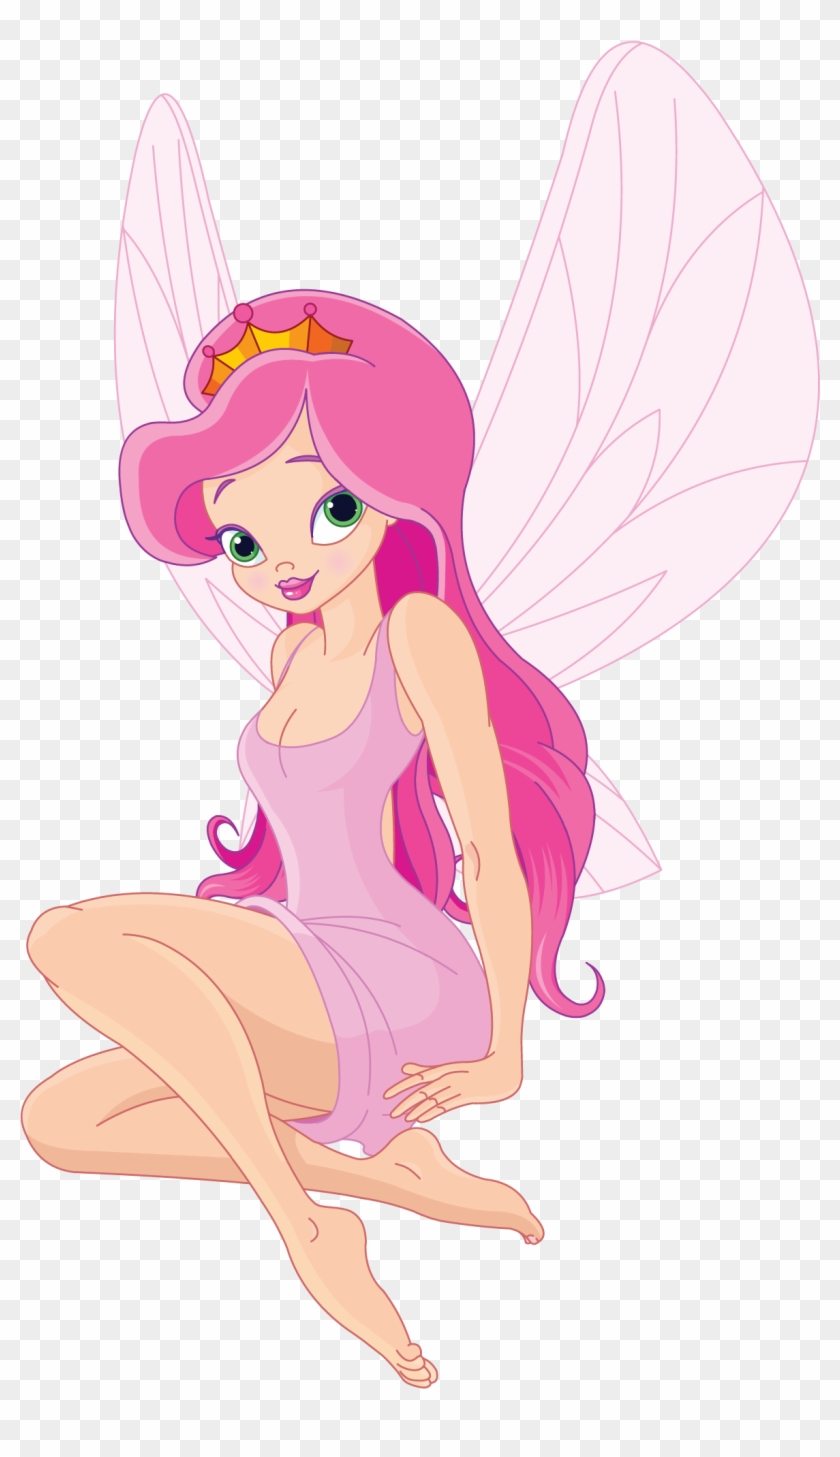 Fairy Cartoon Illustration - Pink Fairy Cartoon Png #970429